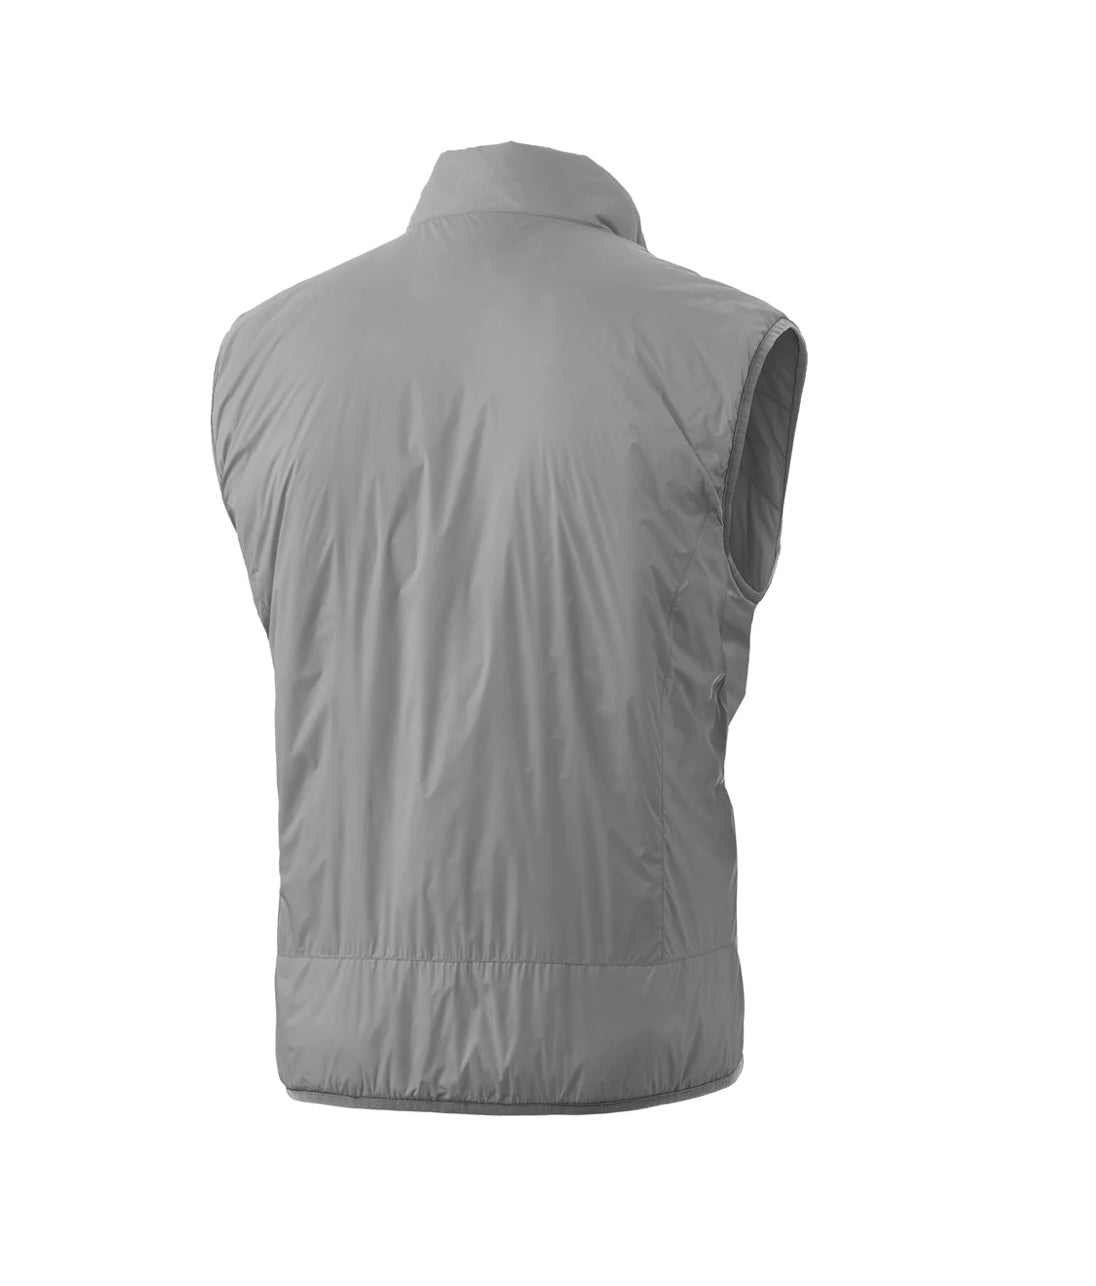 Overcast Grey Waypoint Insulated Vest